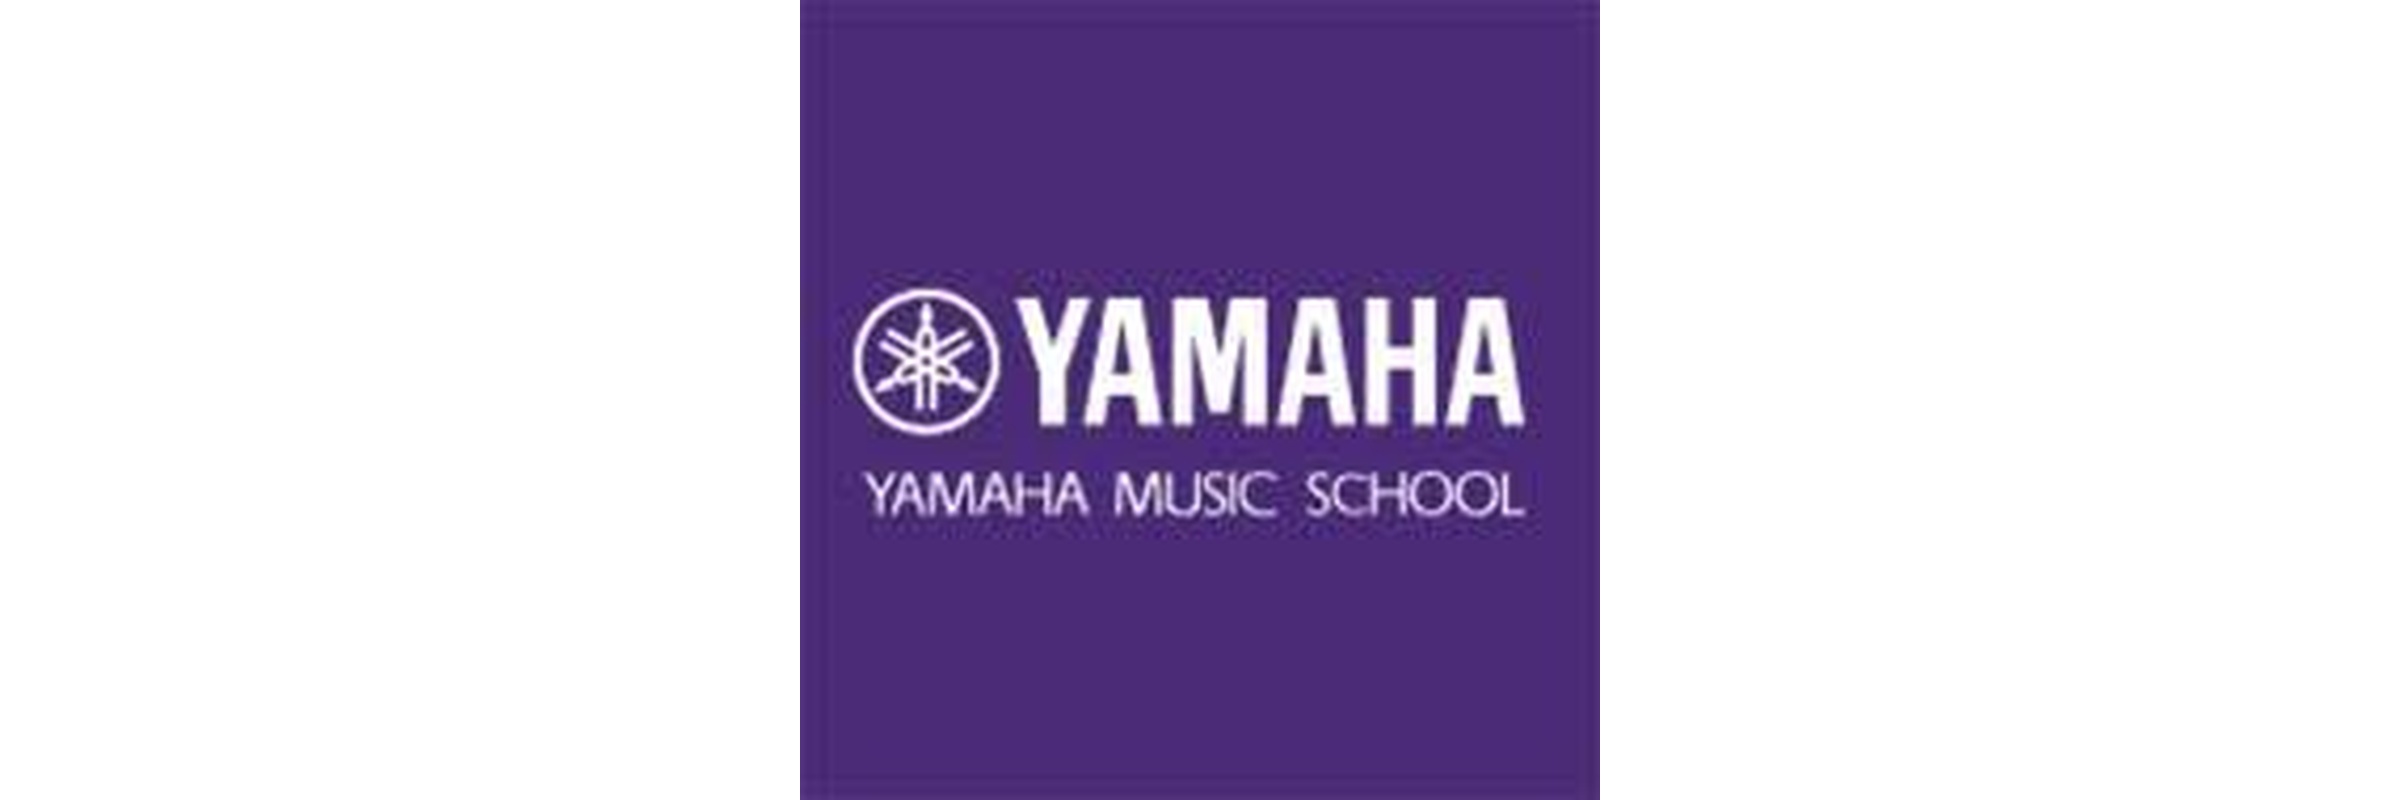 Shadi Sherif - Yamaha music school personal course matrial